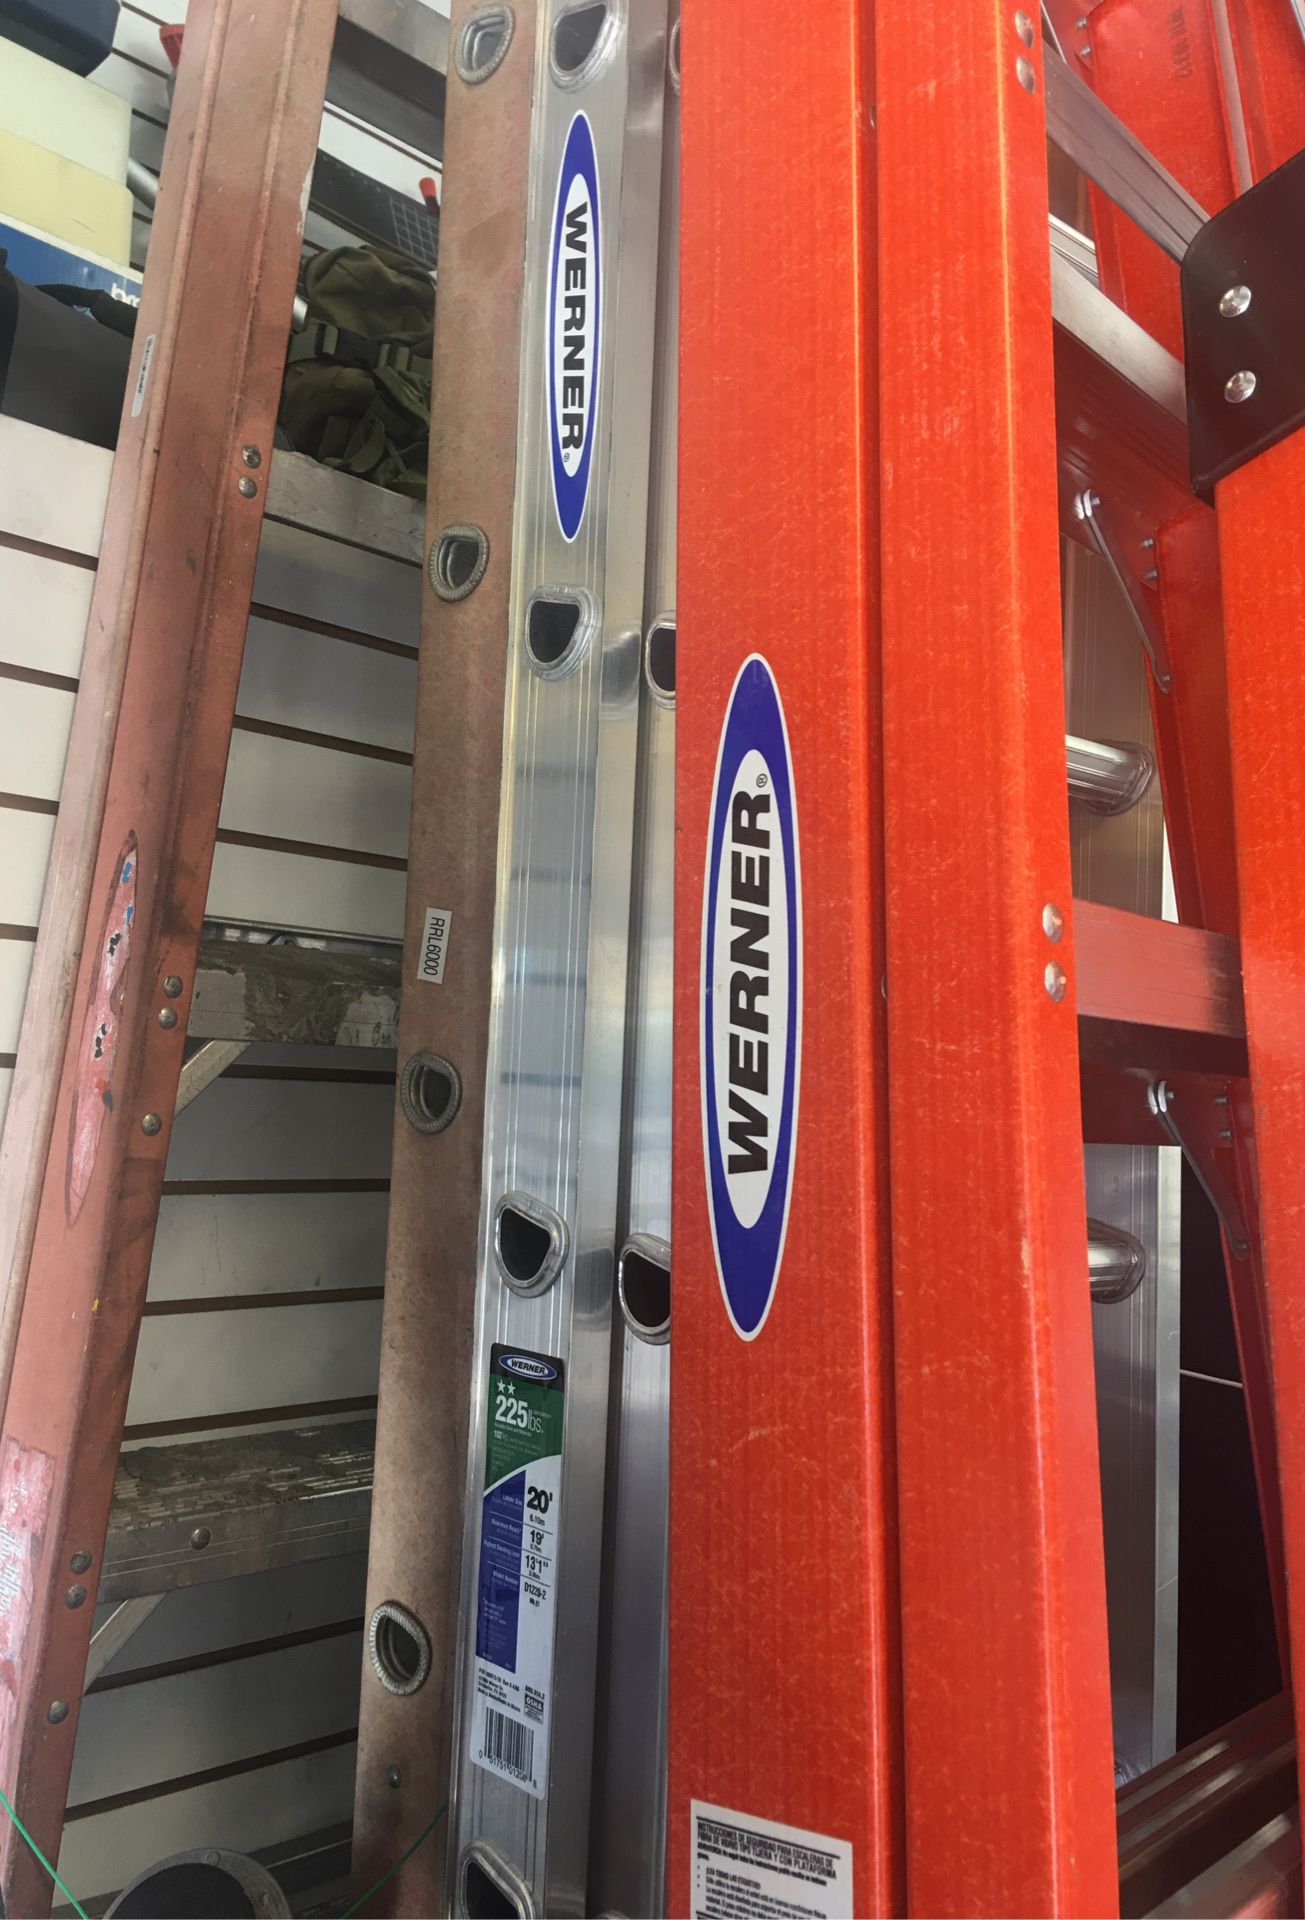 Werner extension aluminum ladder 20 foot brand new